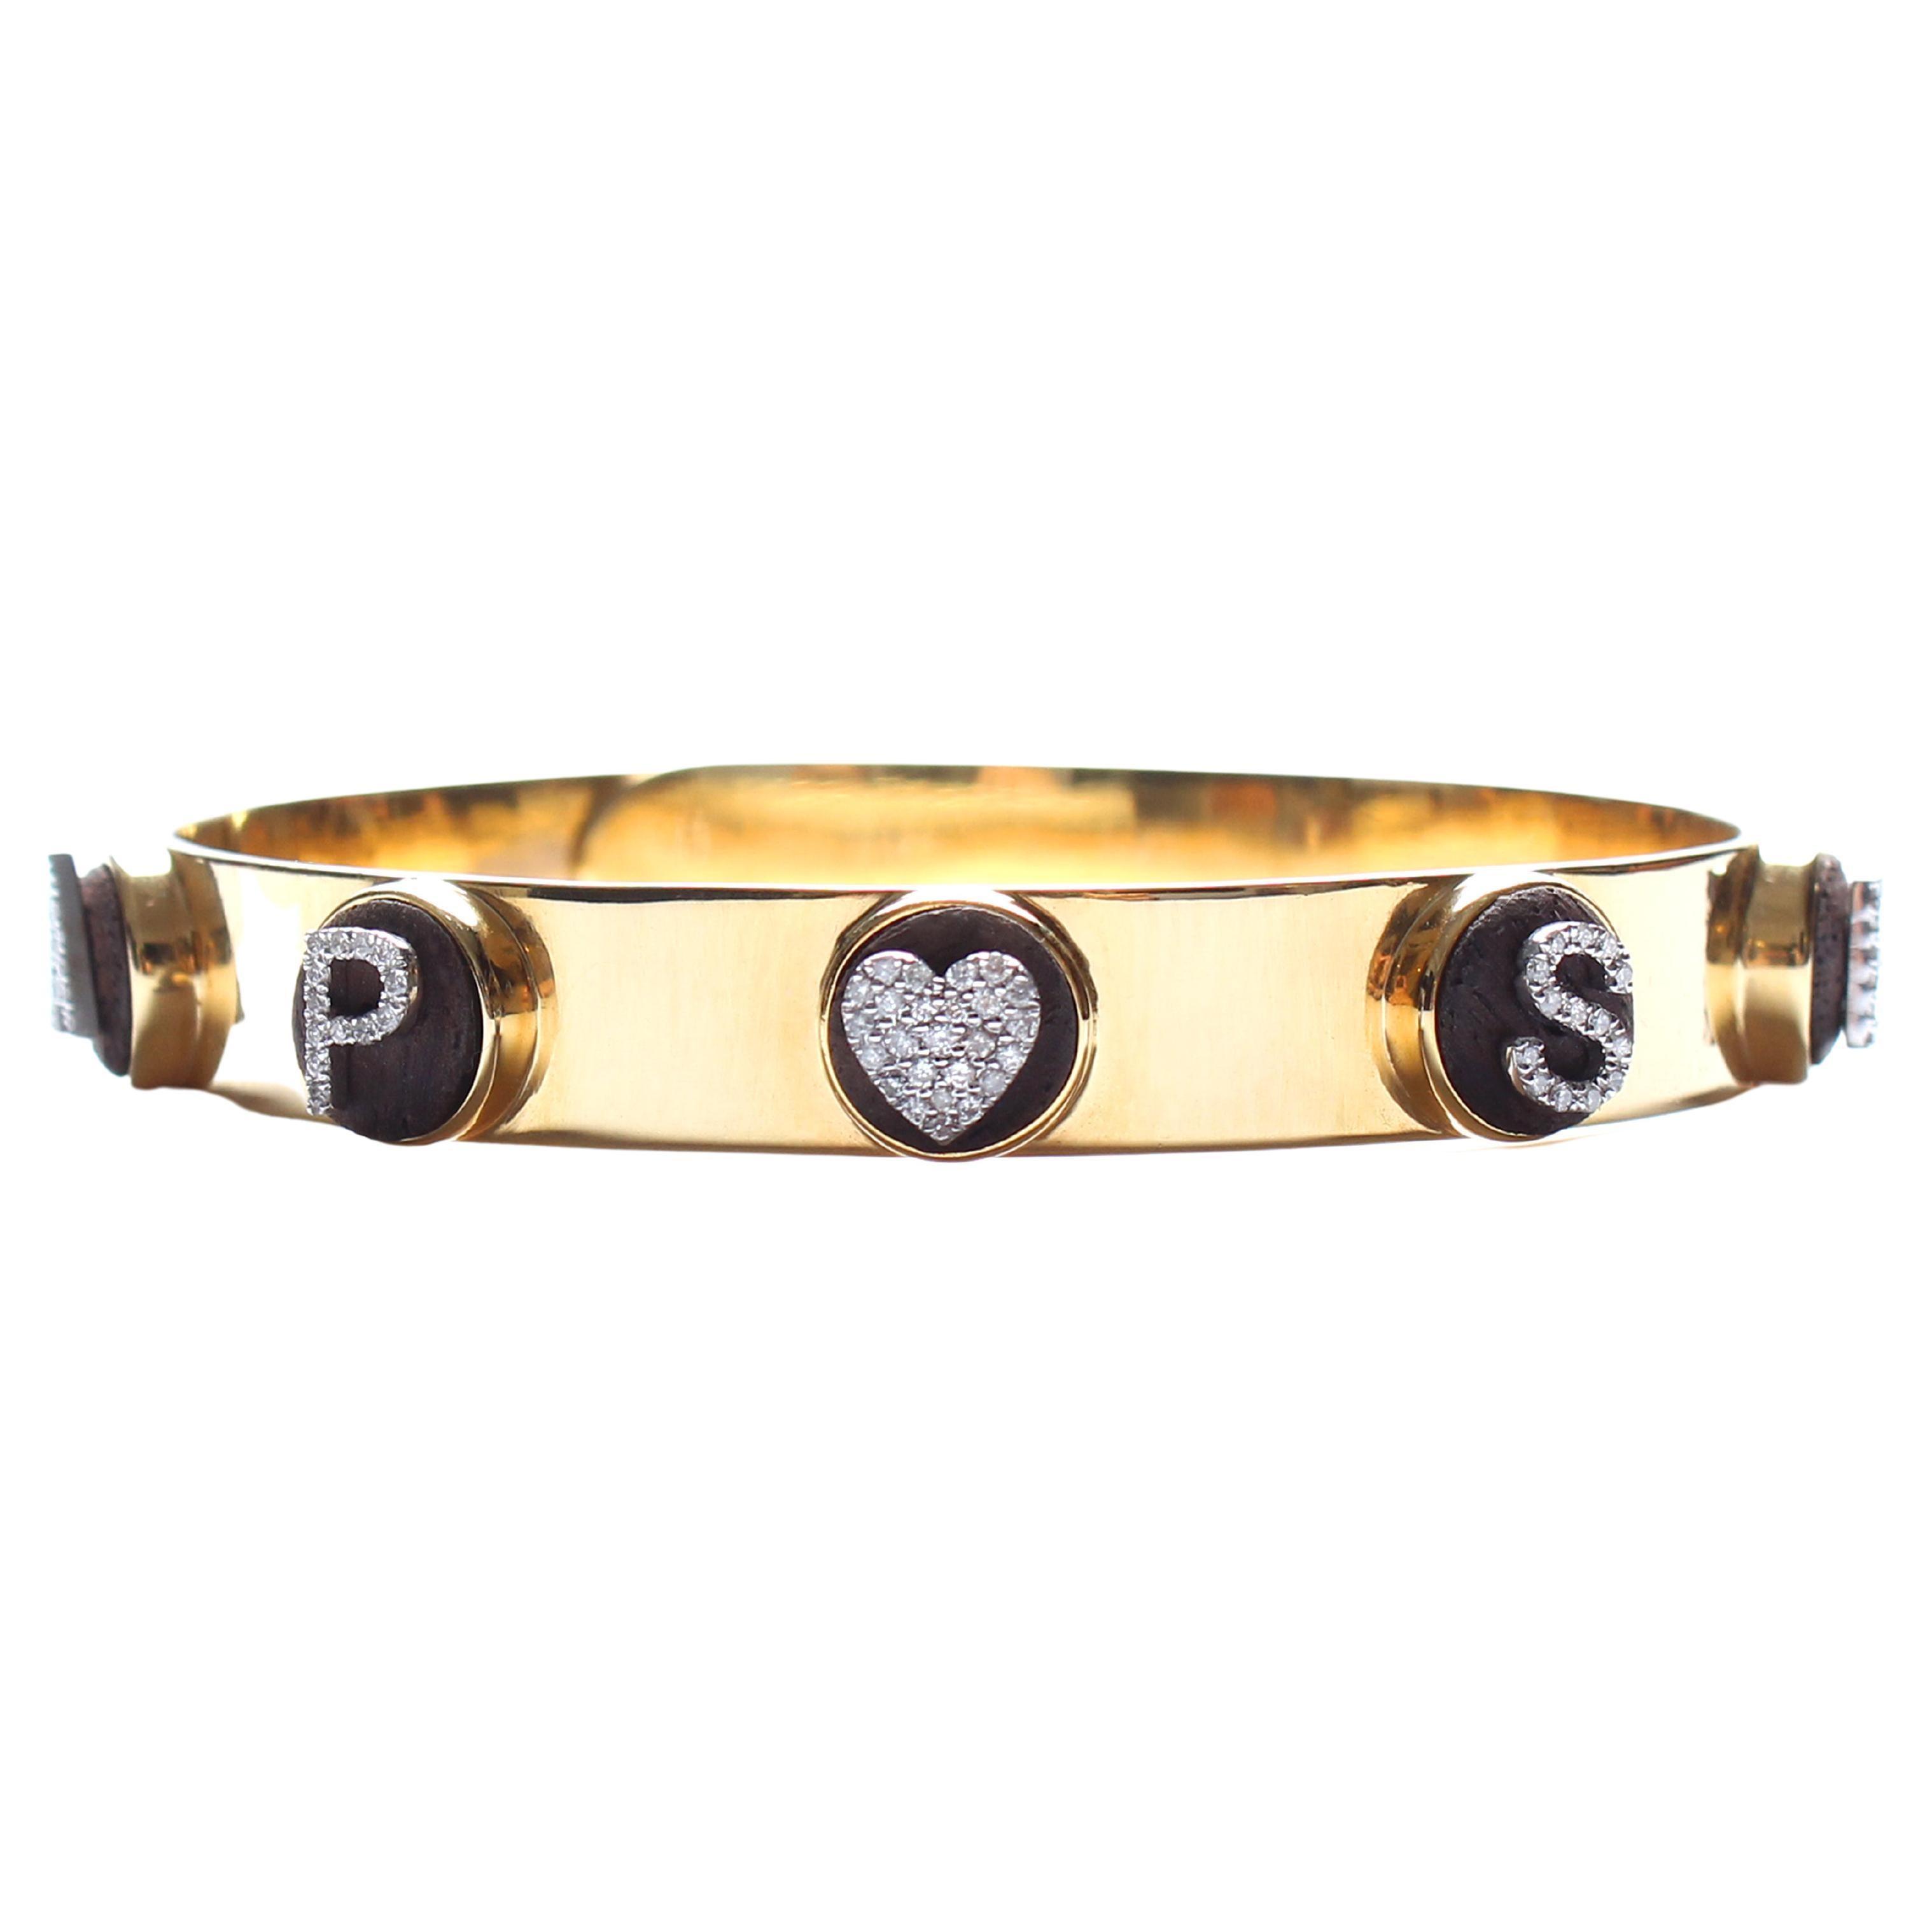 Clarissa Bronfman Custom "Circle of Love" 14k Gold Diamond Ebony Bangle Bracelet